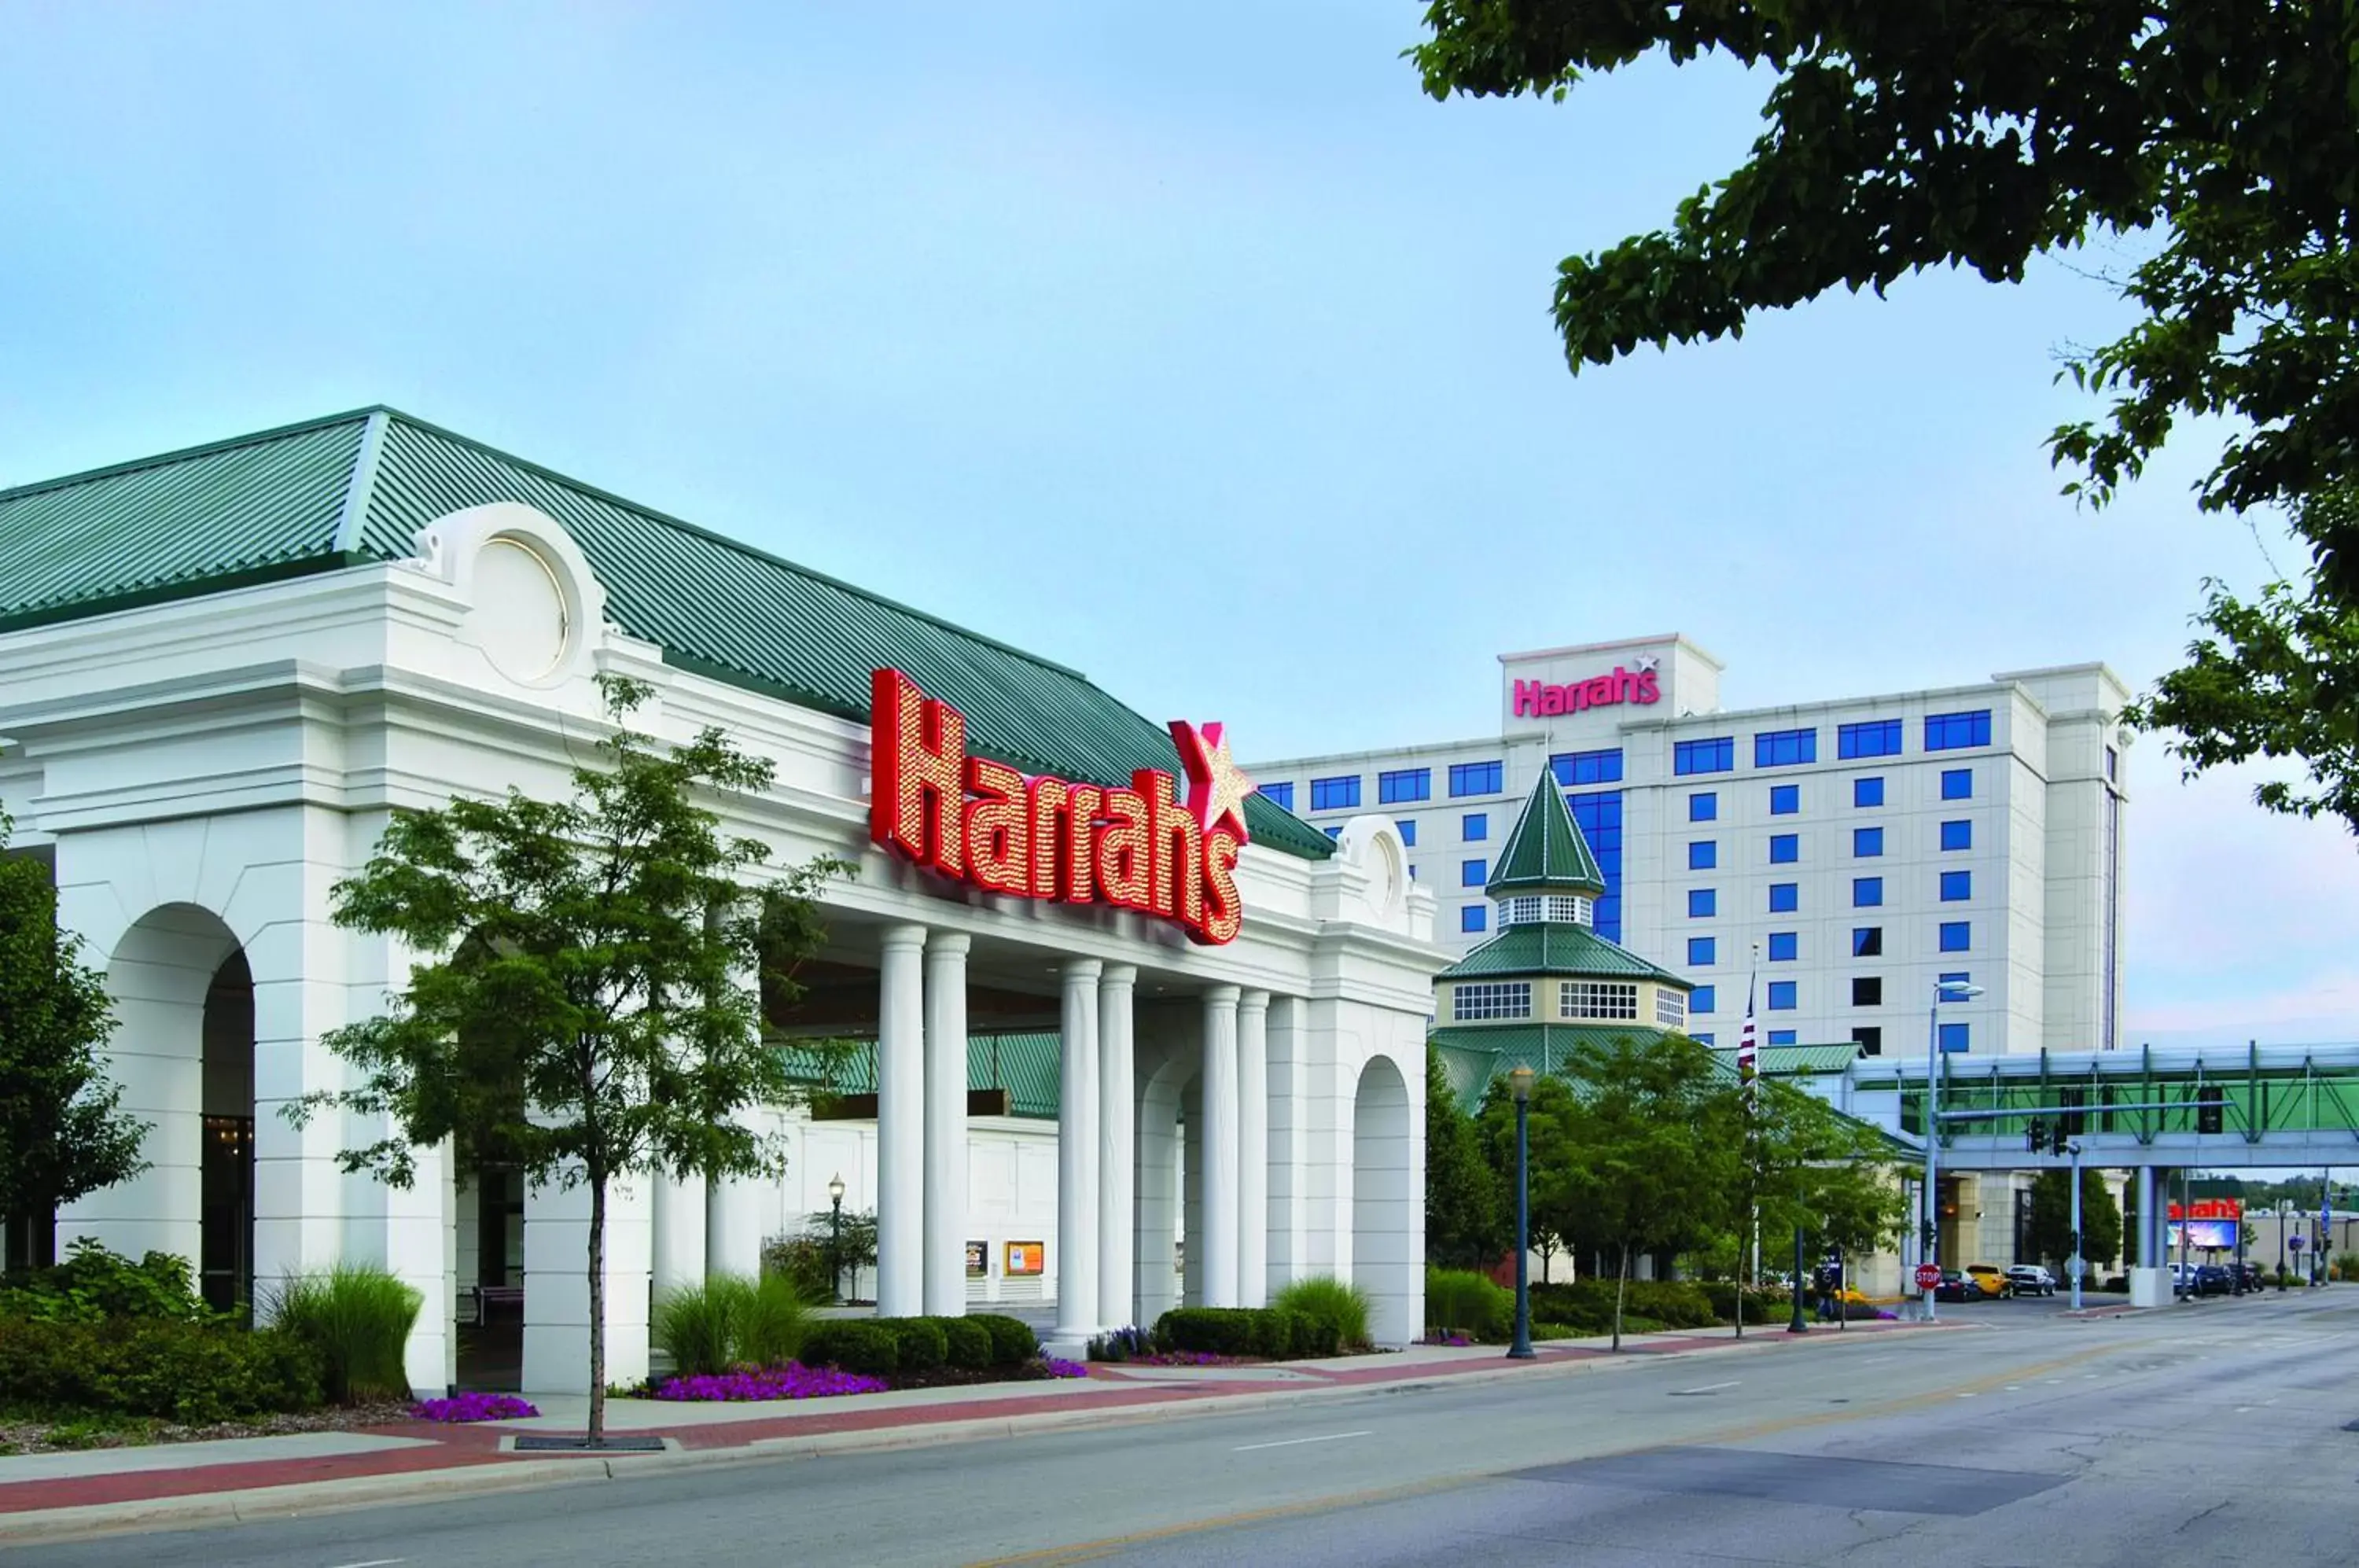 Property building, Facade/Entrance in Harrah's Joliet Casino Hotel